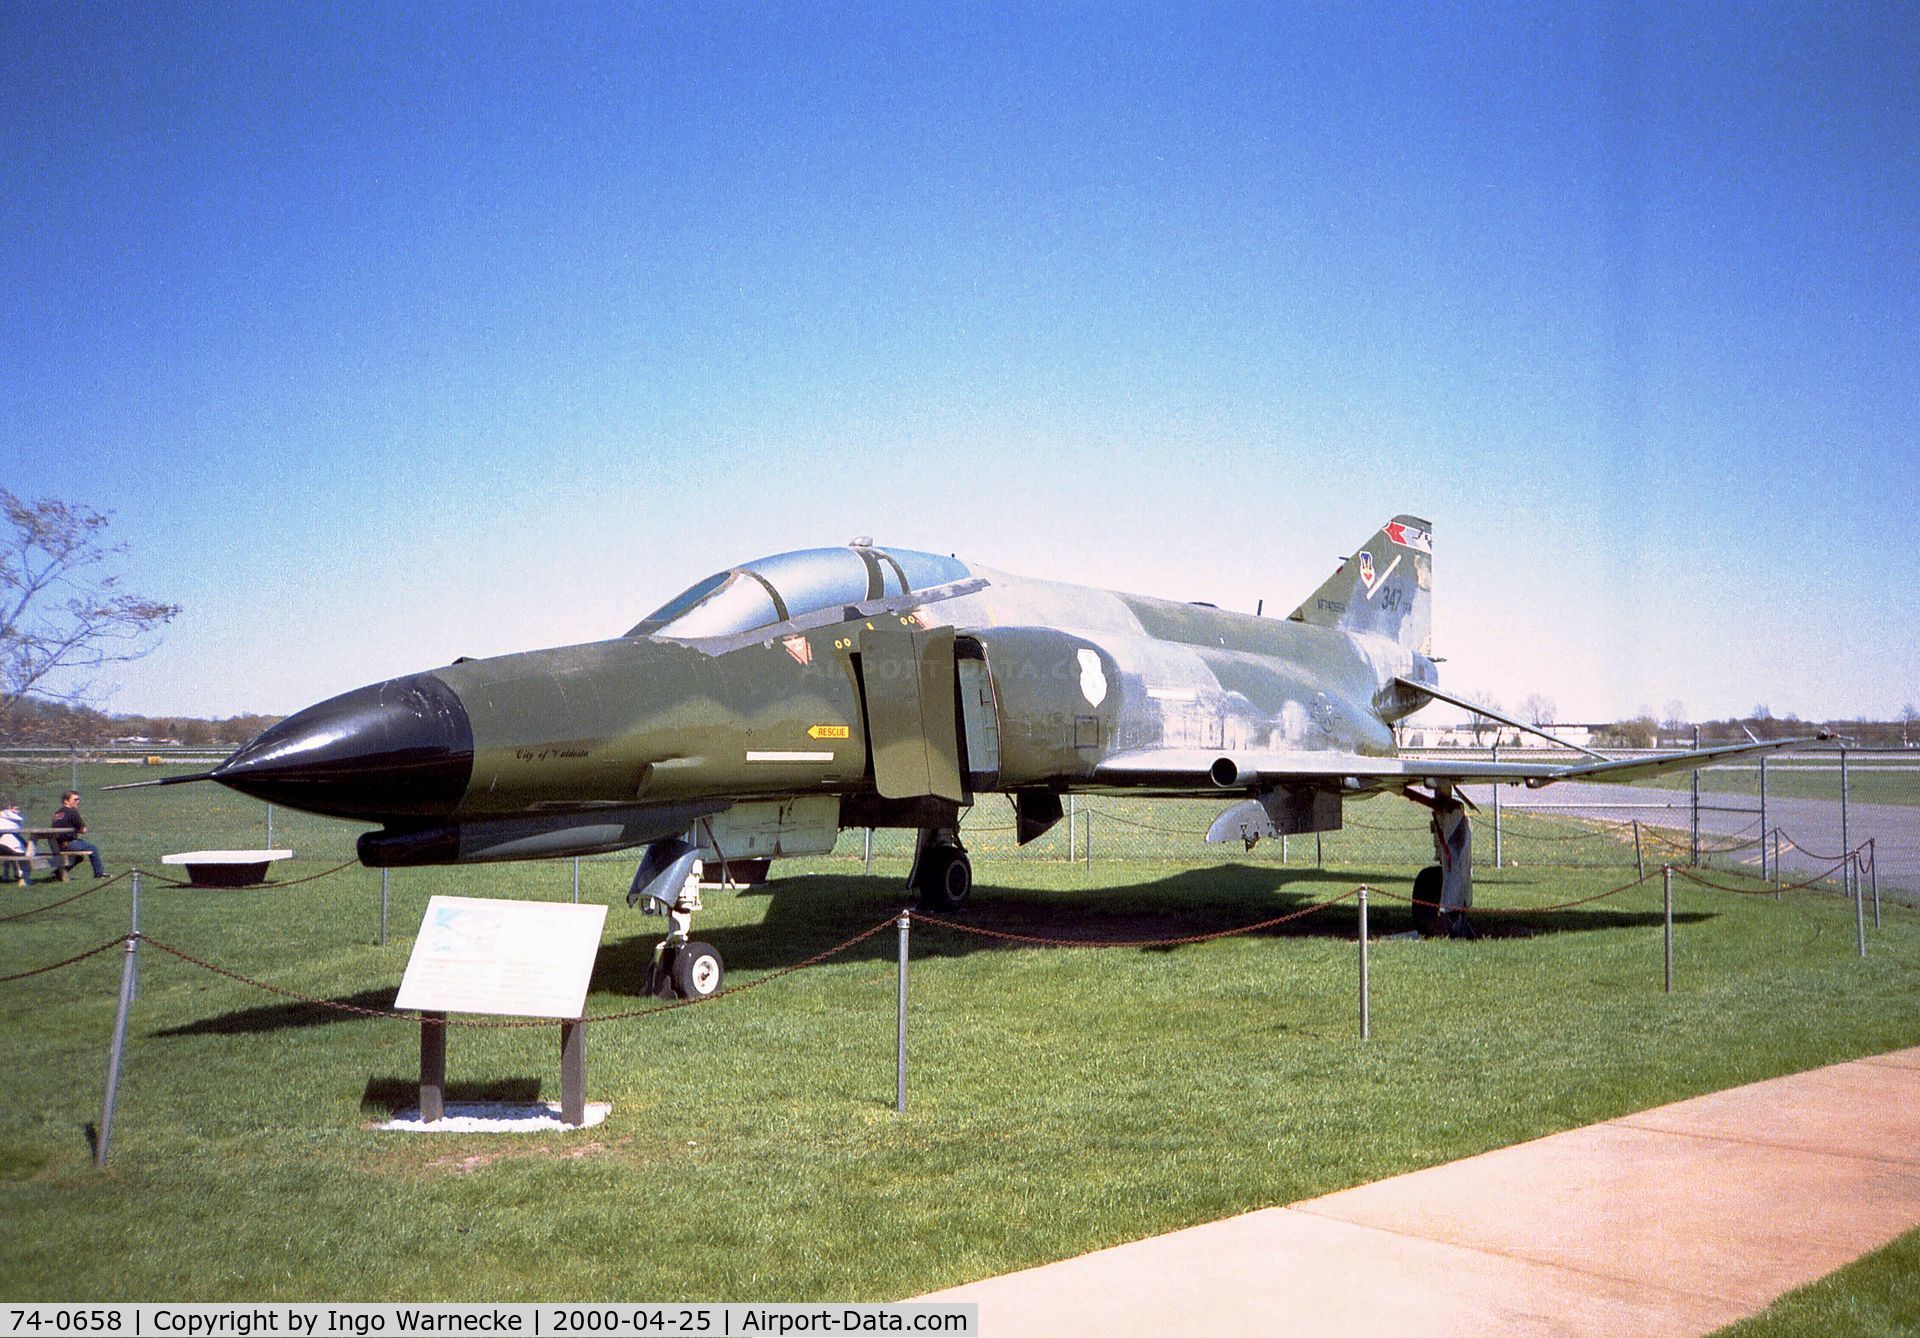 74-0658, 1974 McDonnell Douglas F-4E Phantom II C/N 4809, McDonnell Douglas F-4E Phantom II at the Air Zoo, Kalamazoo MI